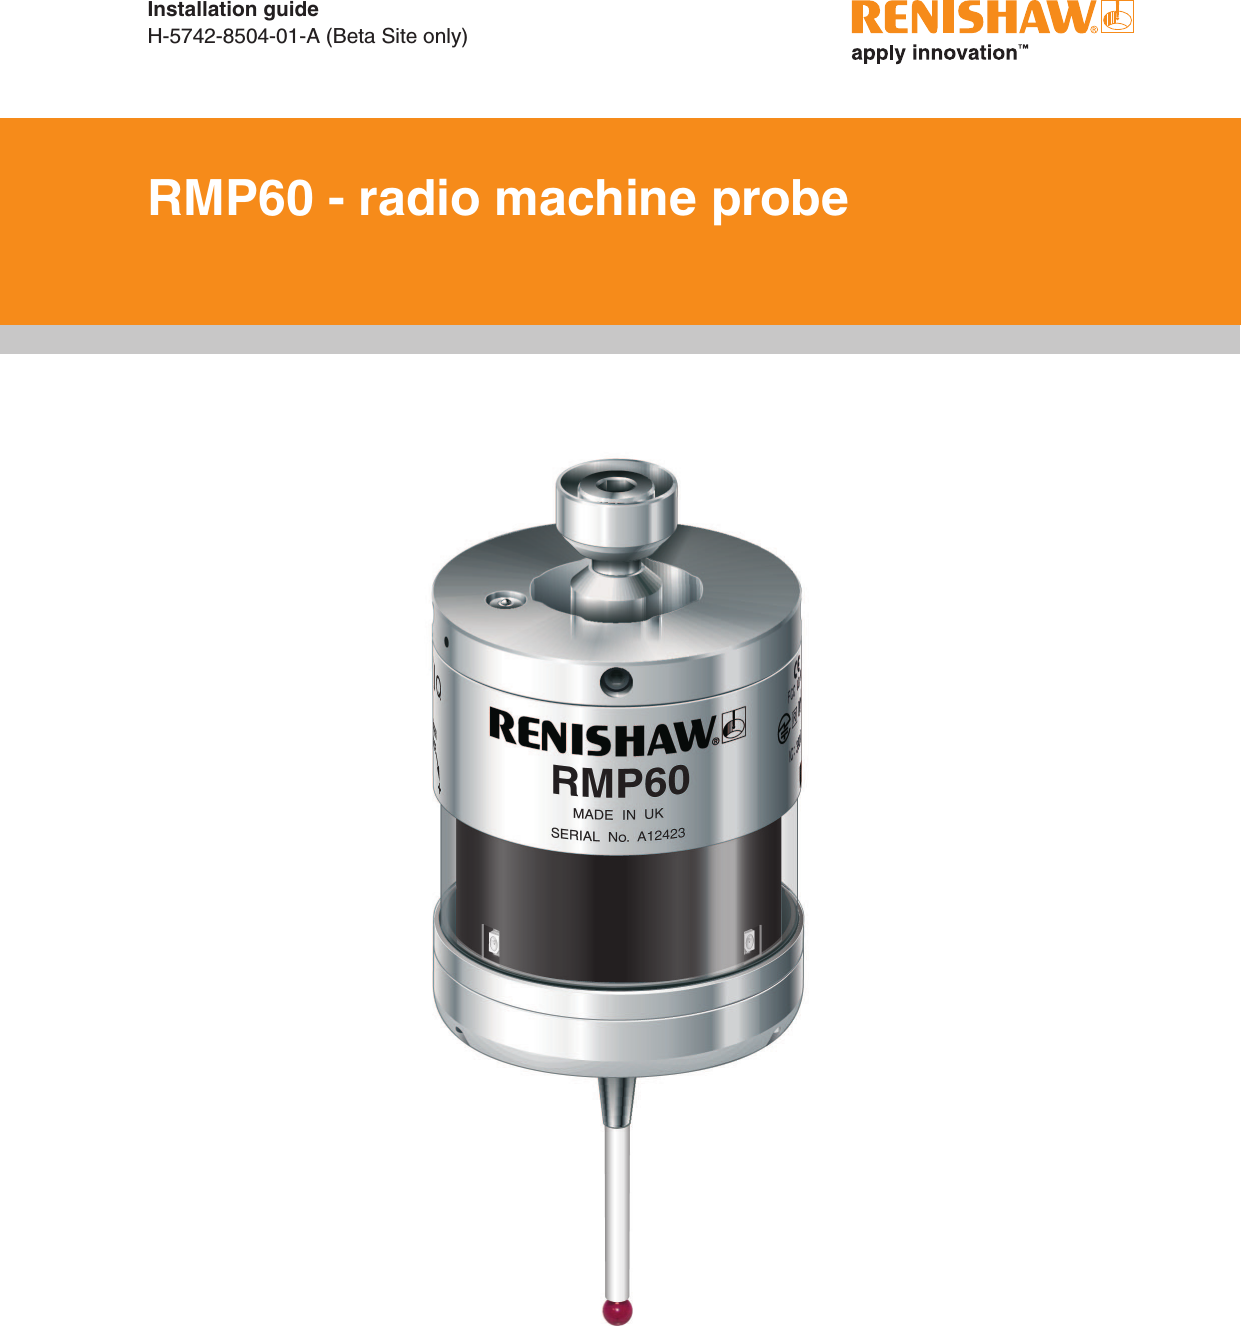 RMP60 - radio machine probeInstallation guideH-5742-8504-01-A (Beta Site only)Draft copy  09/07/12